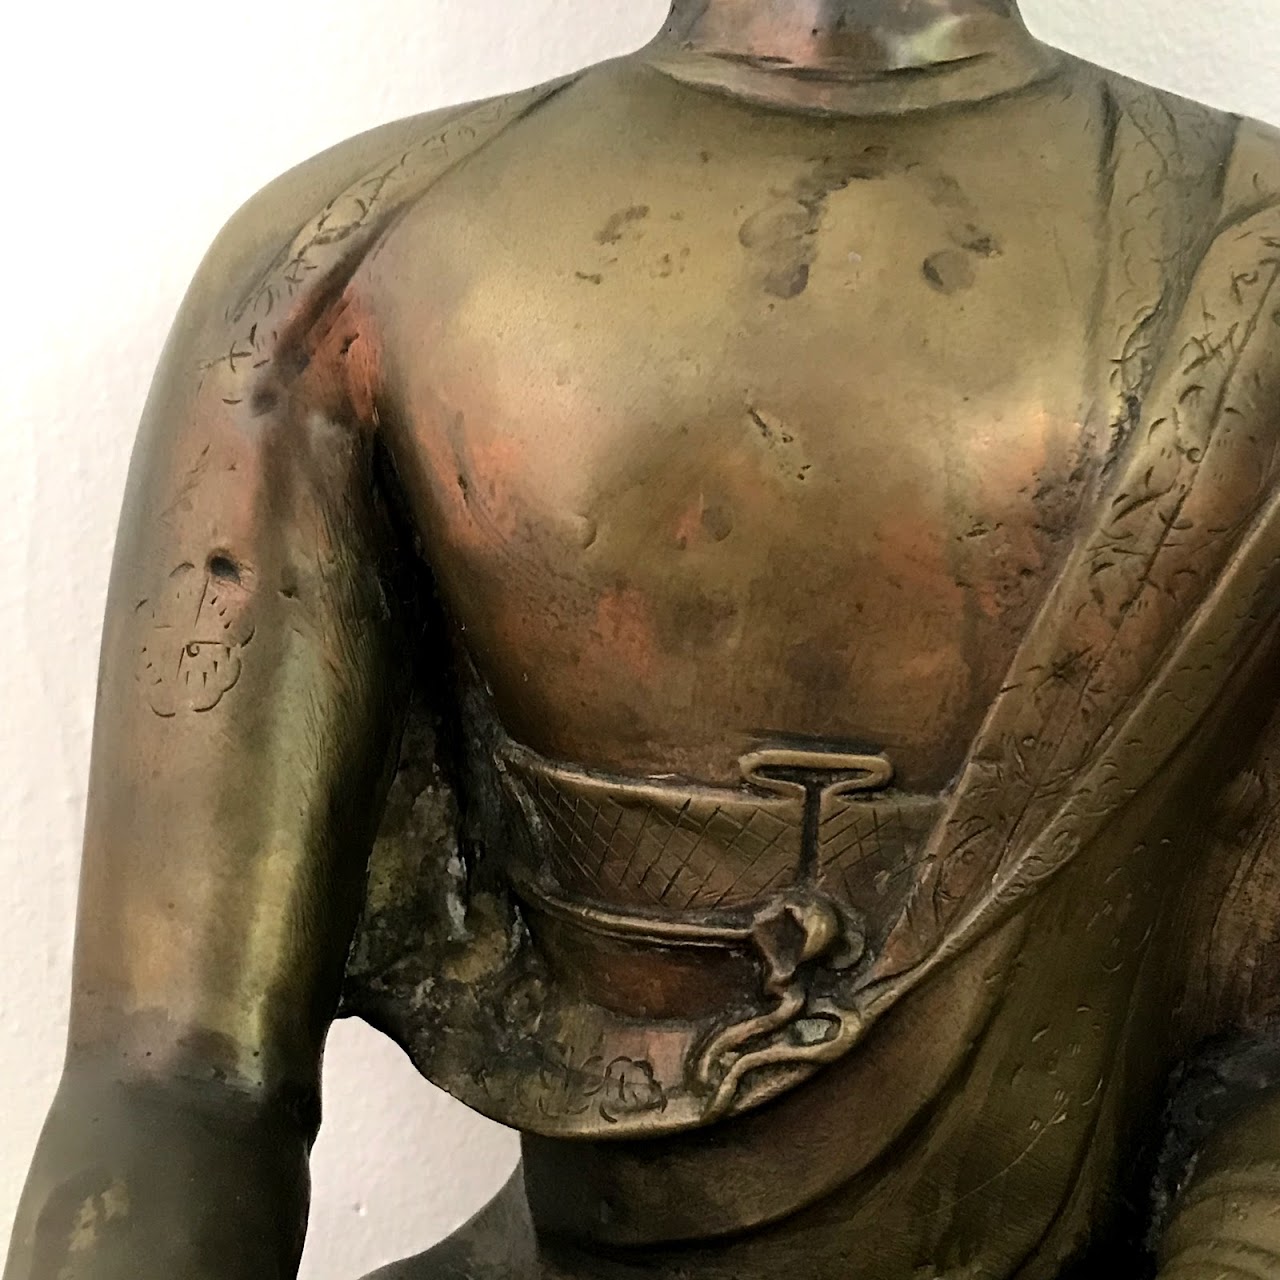 Brass Buddha Statue